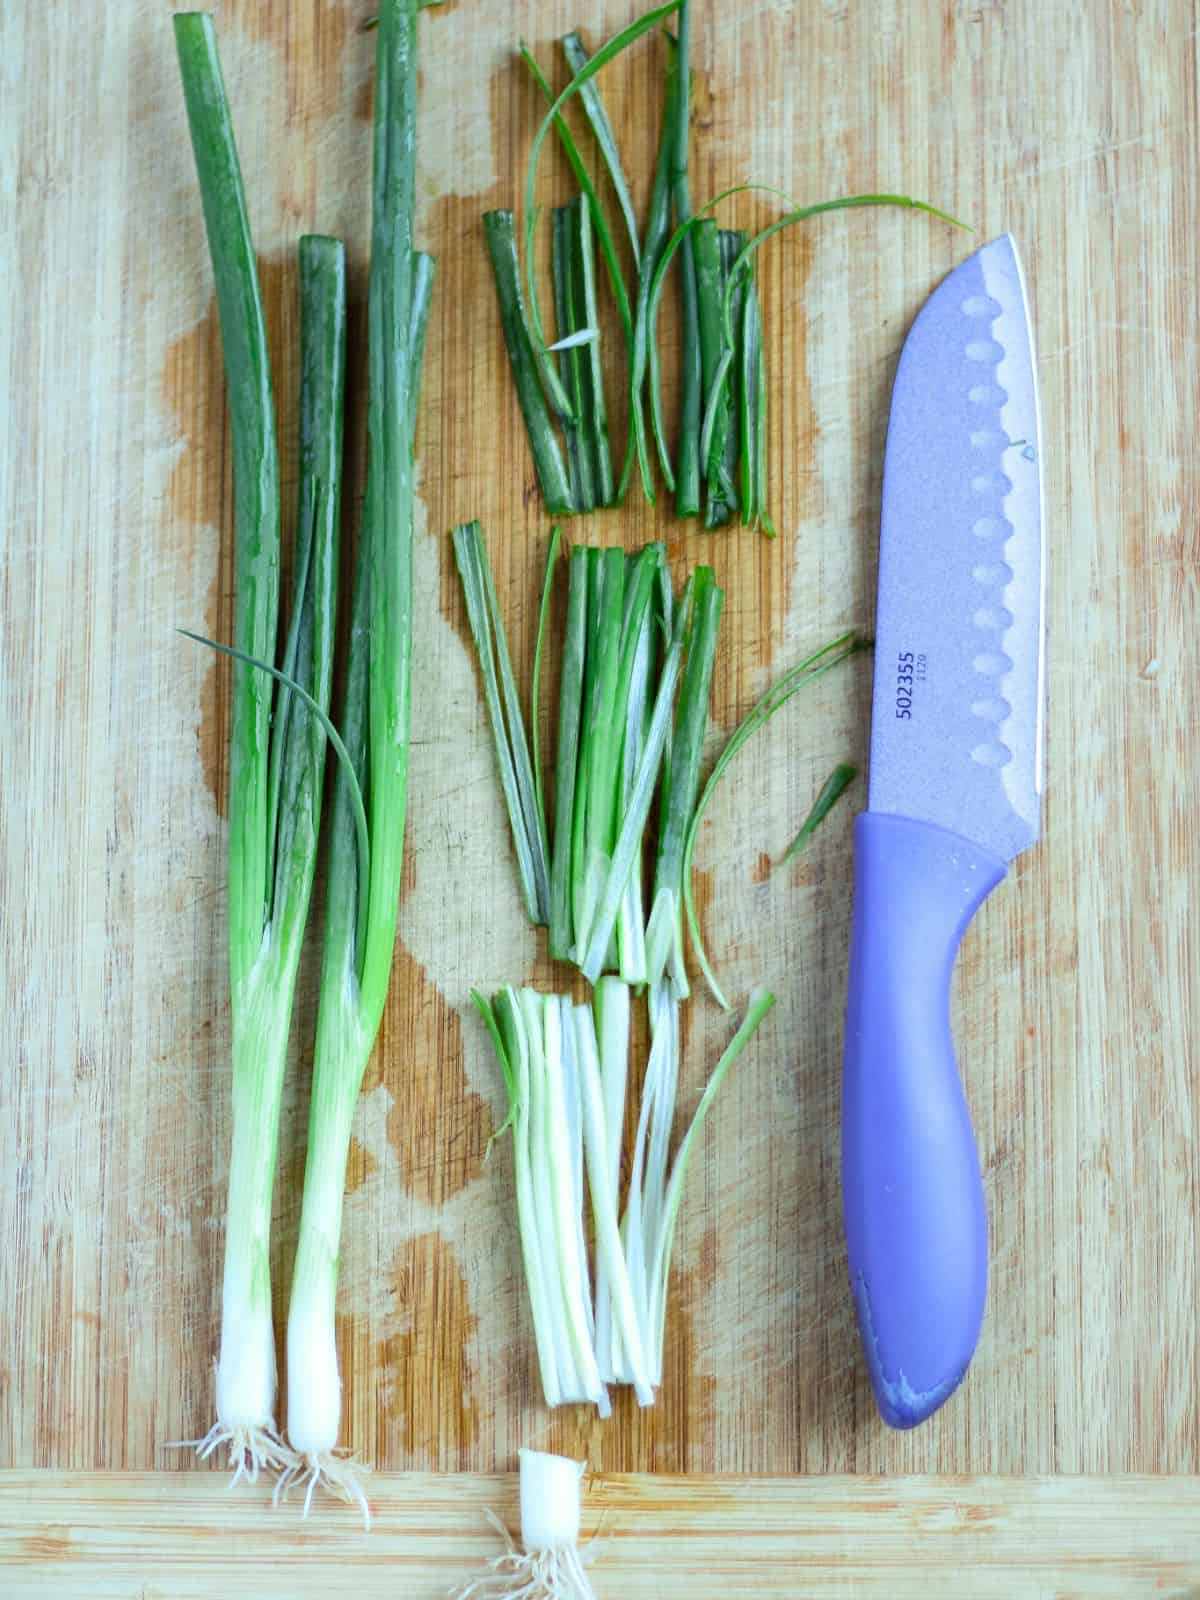 Cutting green onion to make salad.